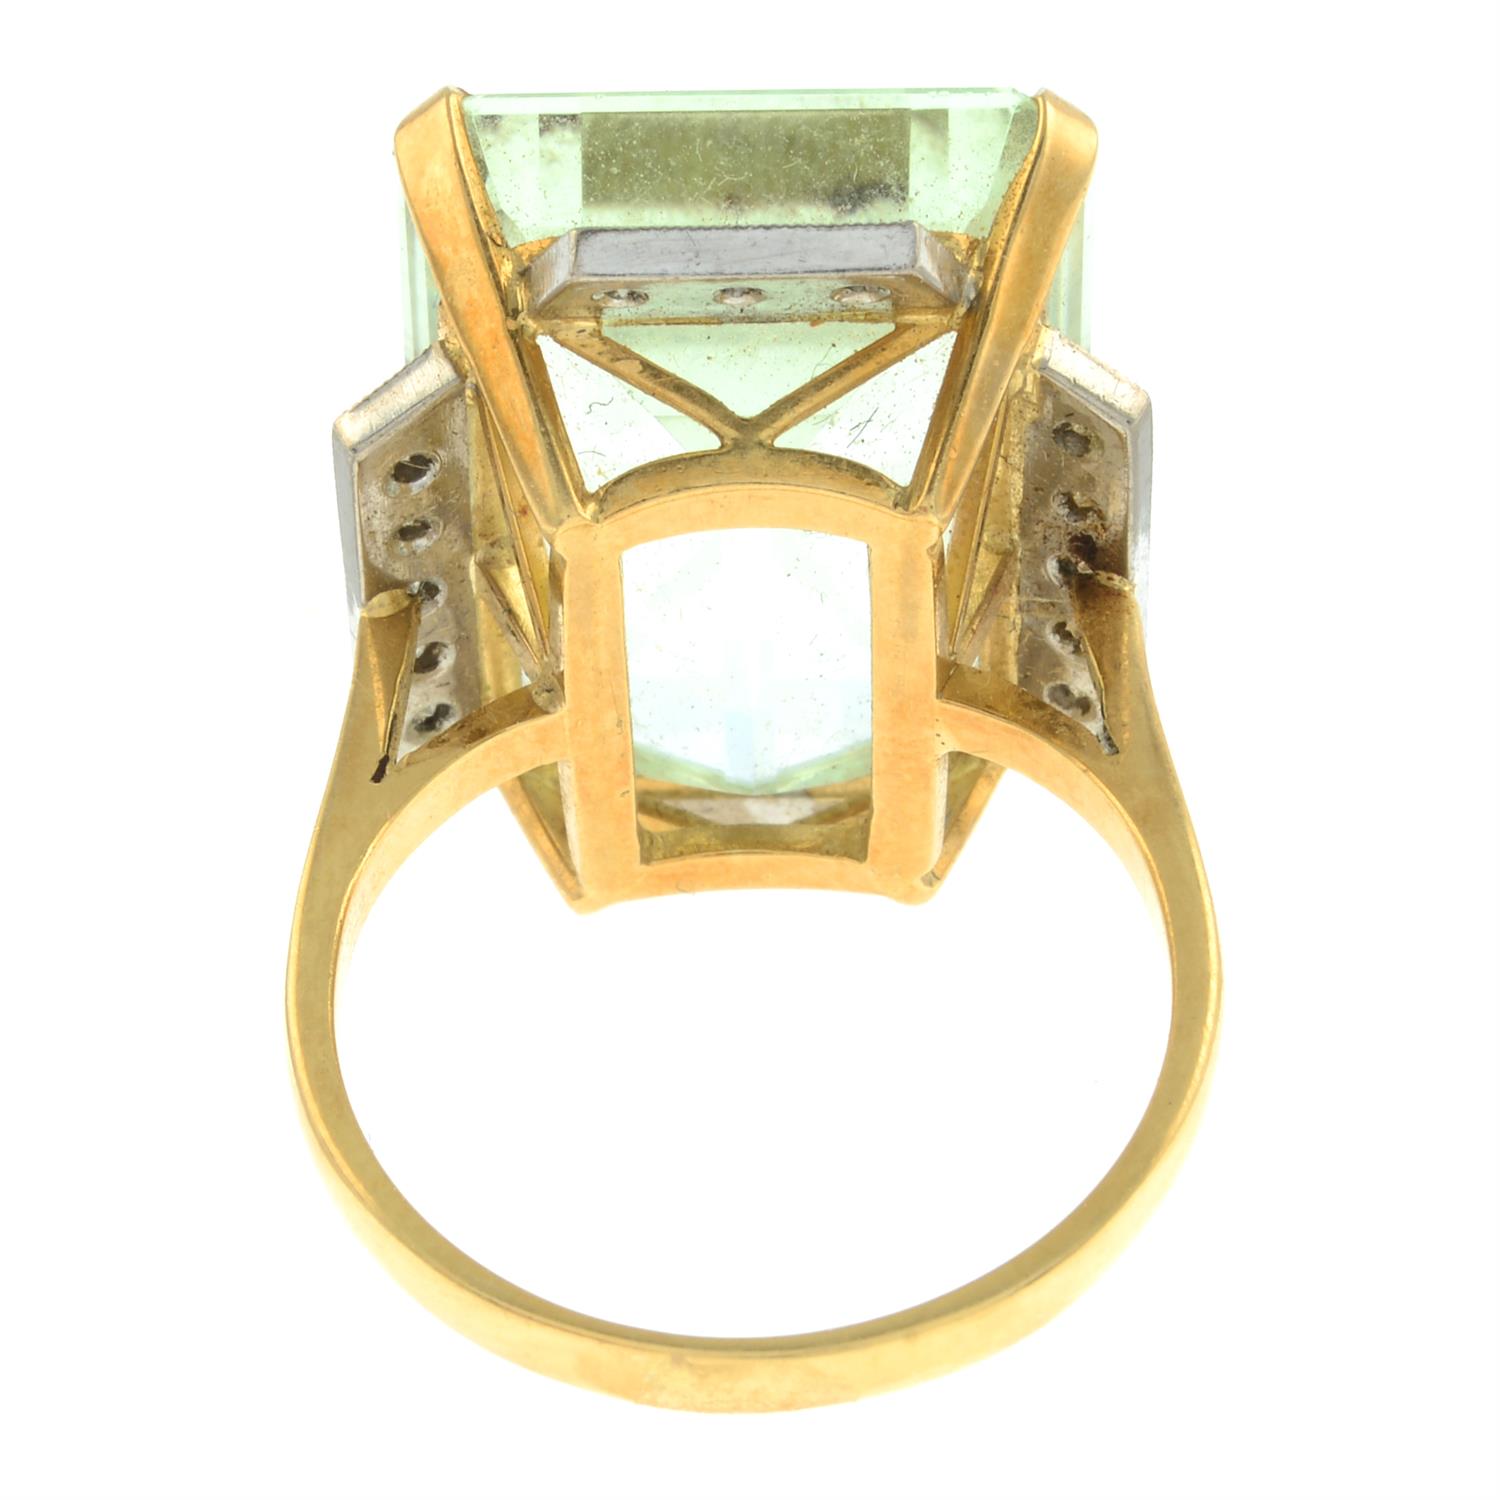 18ct gold prasiolite and diamond cocktail ring - Image 2 of 2